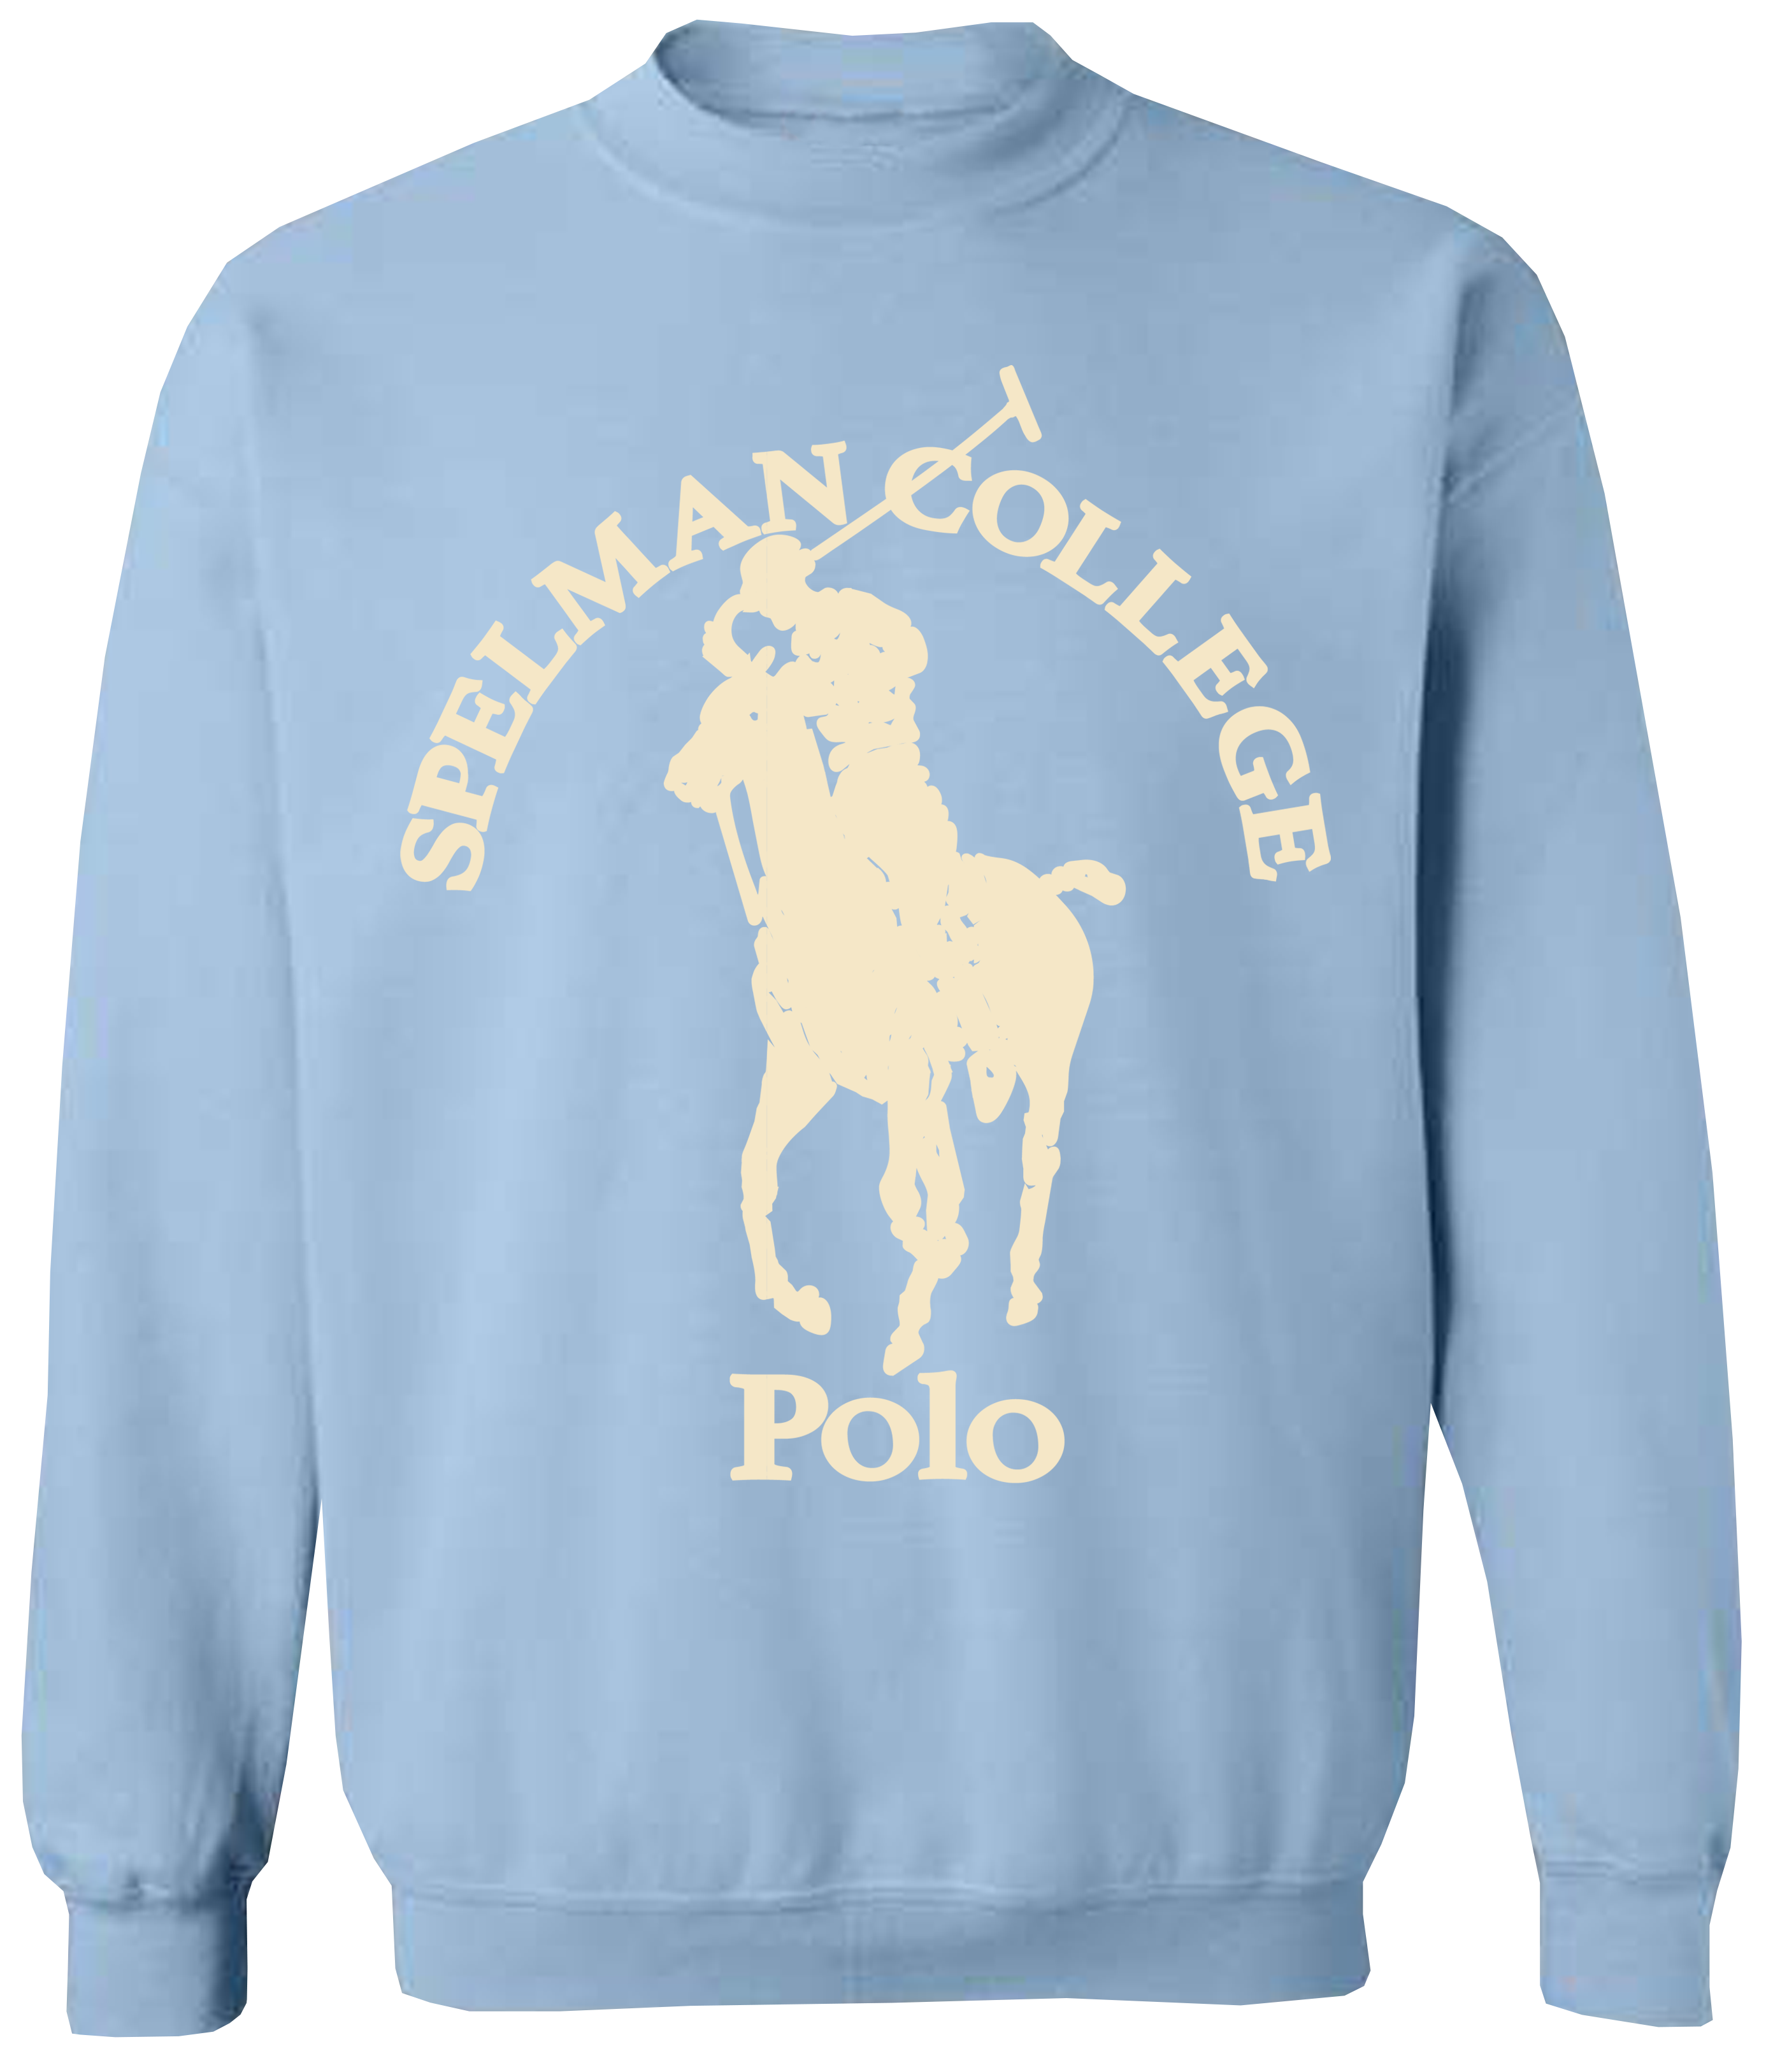 HBCU Polo Crewneck Sweatshirt - Spelman